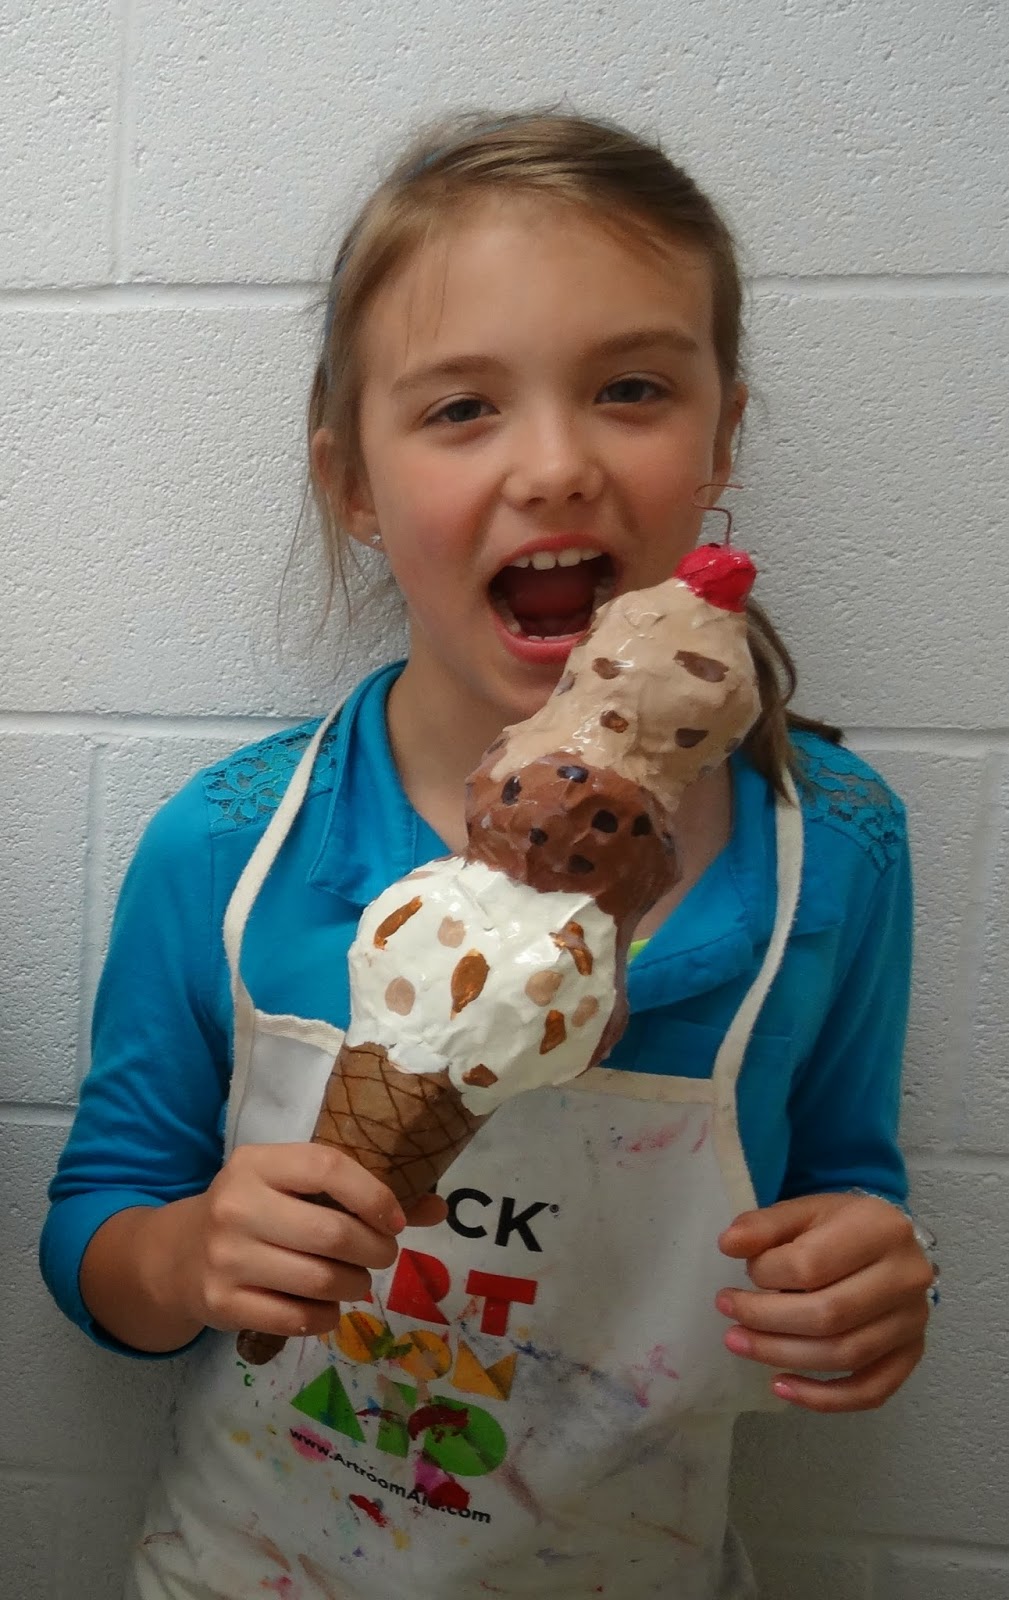 Paper mache ice cream cones made by kids. - ARTBAR